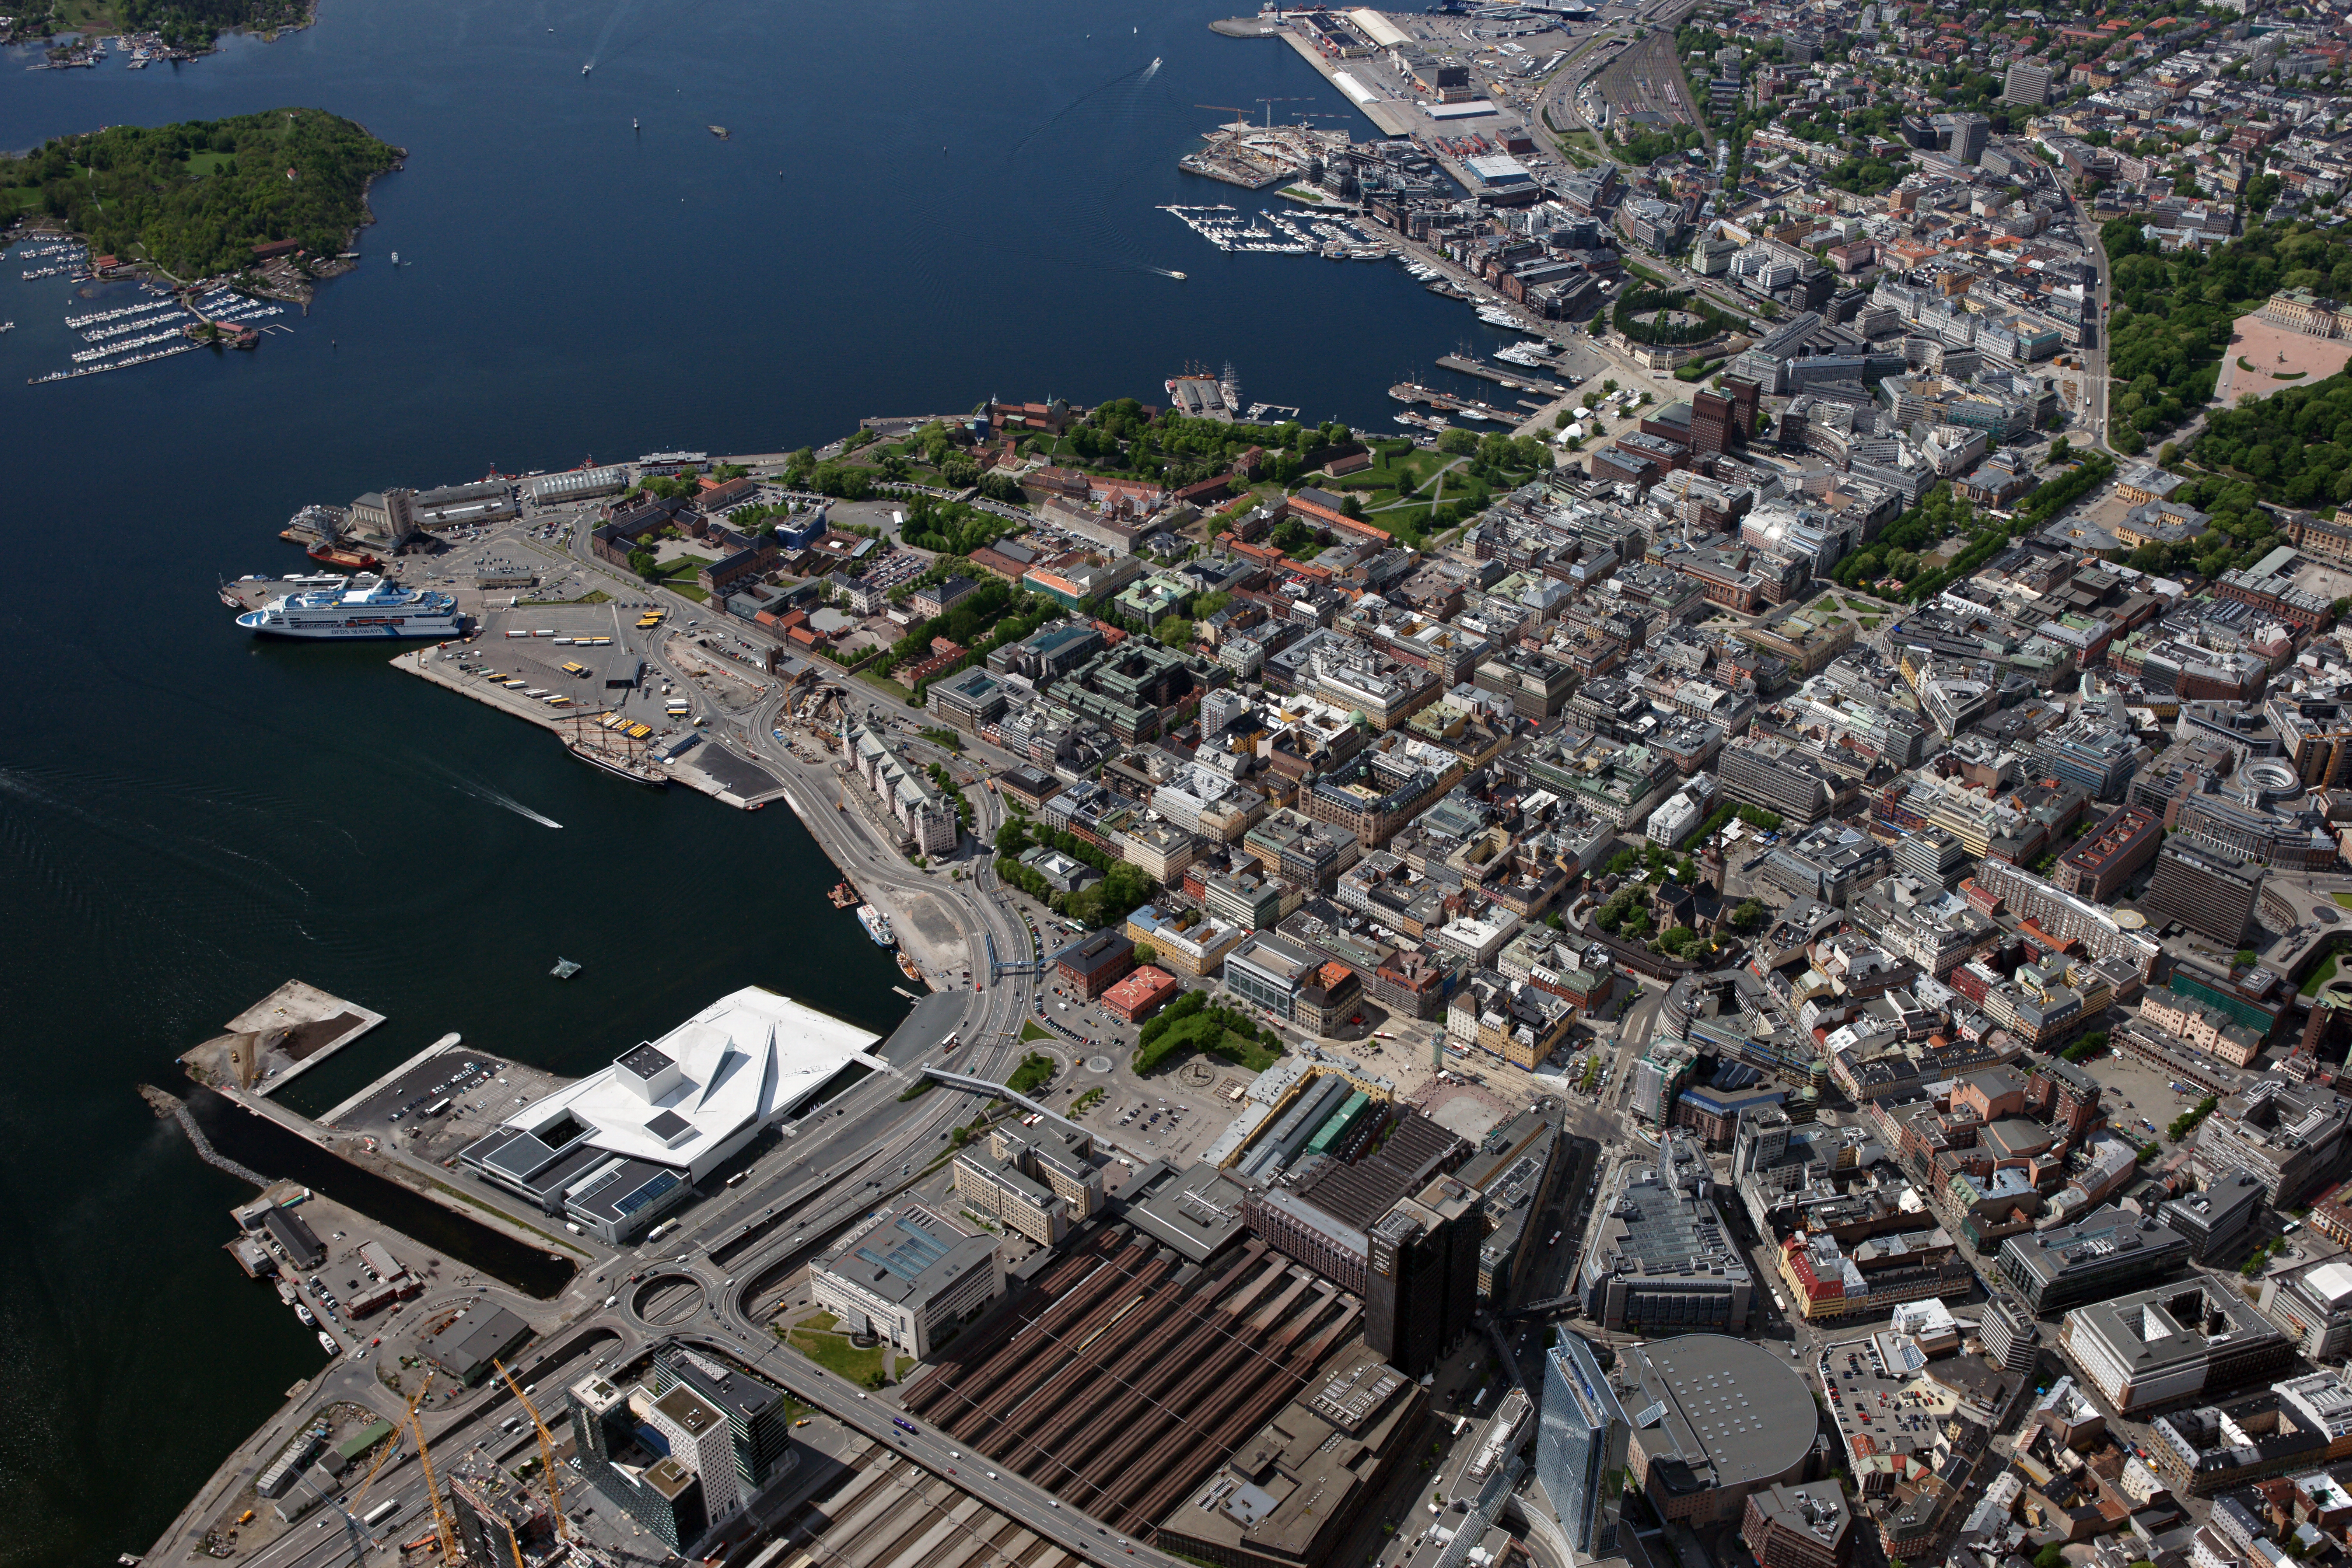 Oslo ftom above. Photo: Lasse Tur